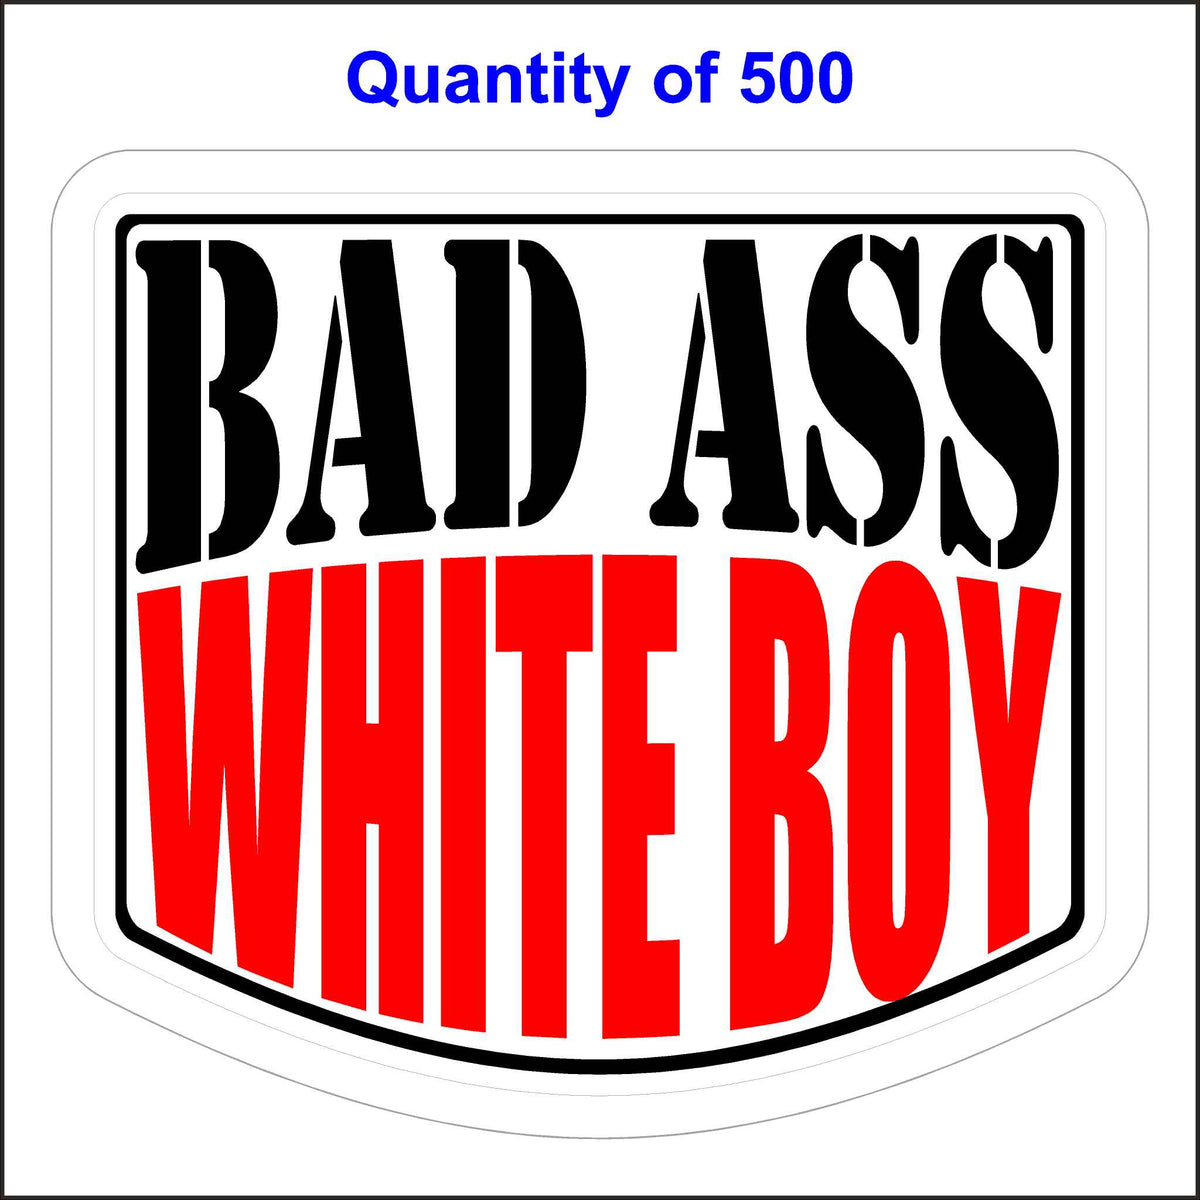 Bad Ass White Boy Sticker 500 Quantity.